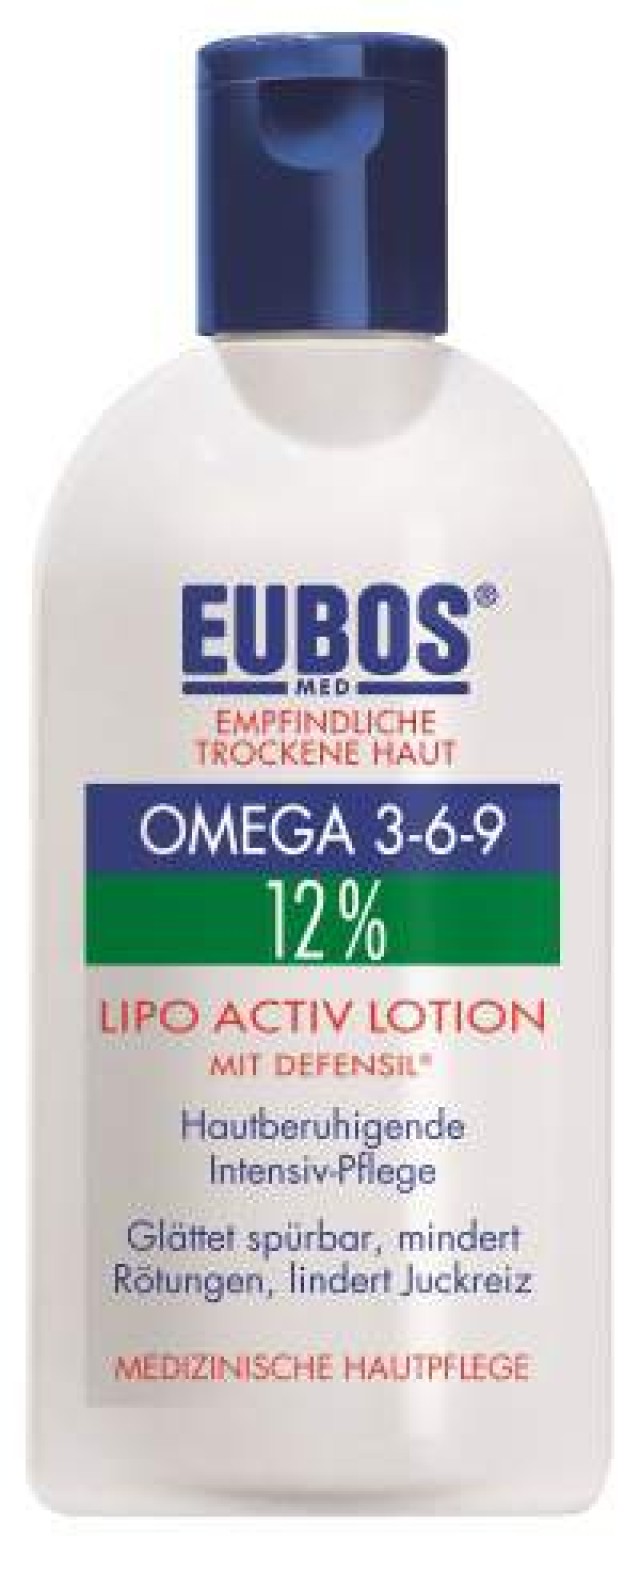 EUBOS OMEGA 3-6-9 LIPO ACTIV LOTION ΜE DEFENSIL® 12% 200ml